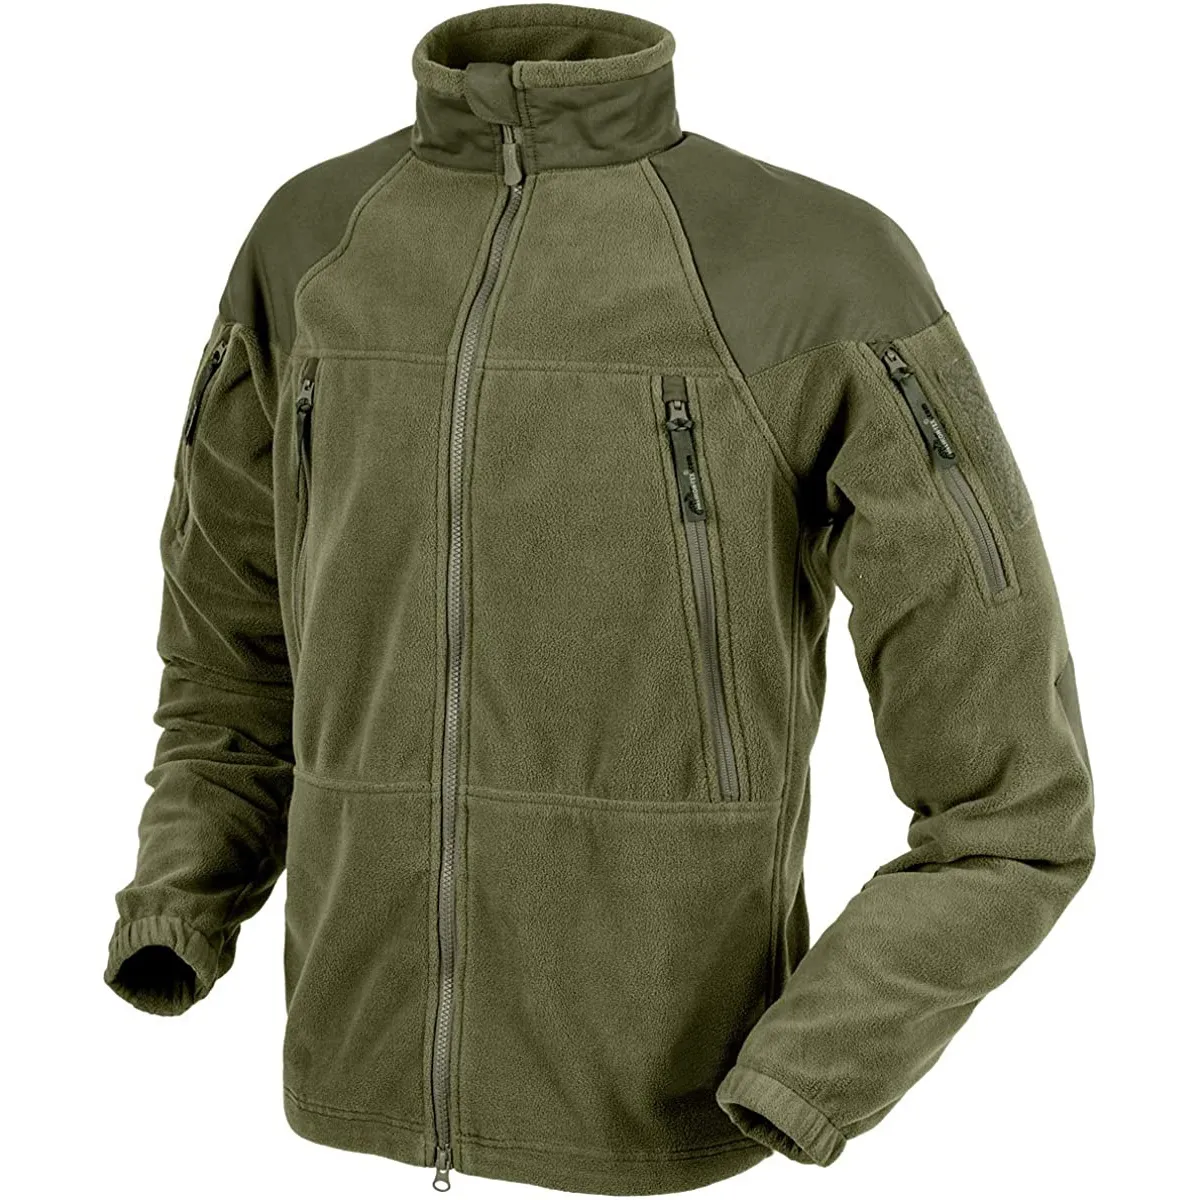 Heavyweight Tactical Jacket Men's Heavy Fleece Jacket Olive Green Warm Hunting Gear